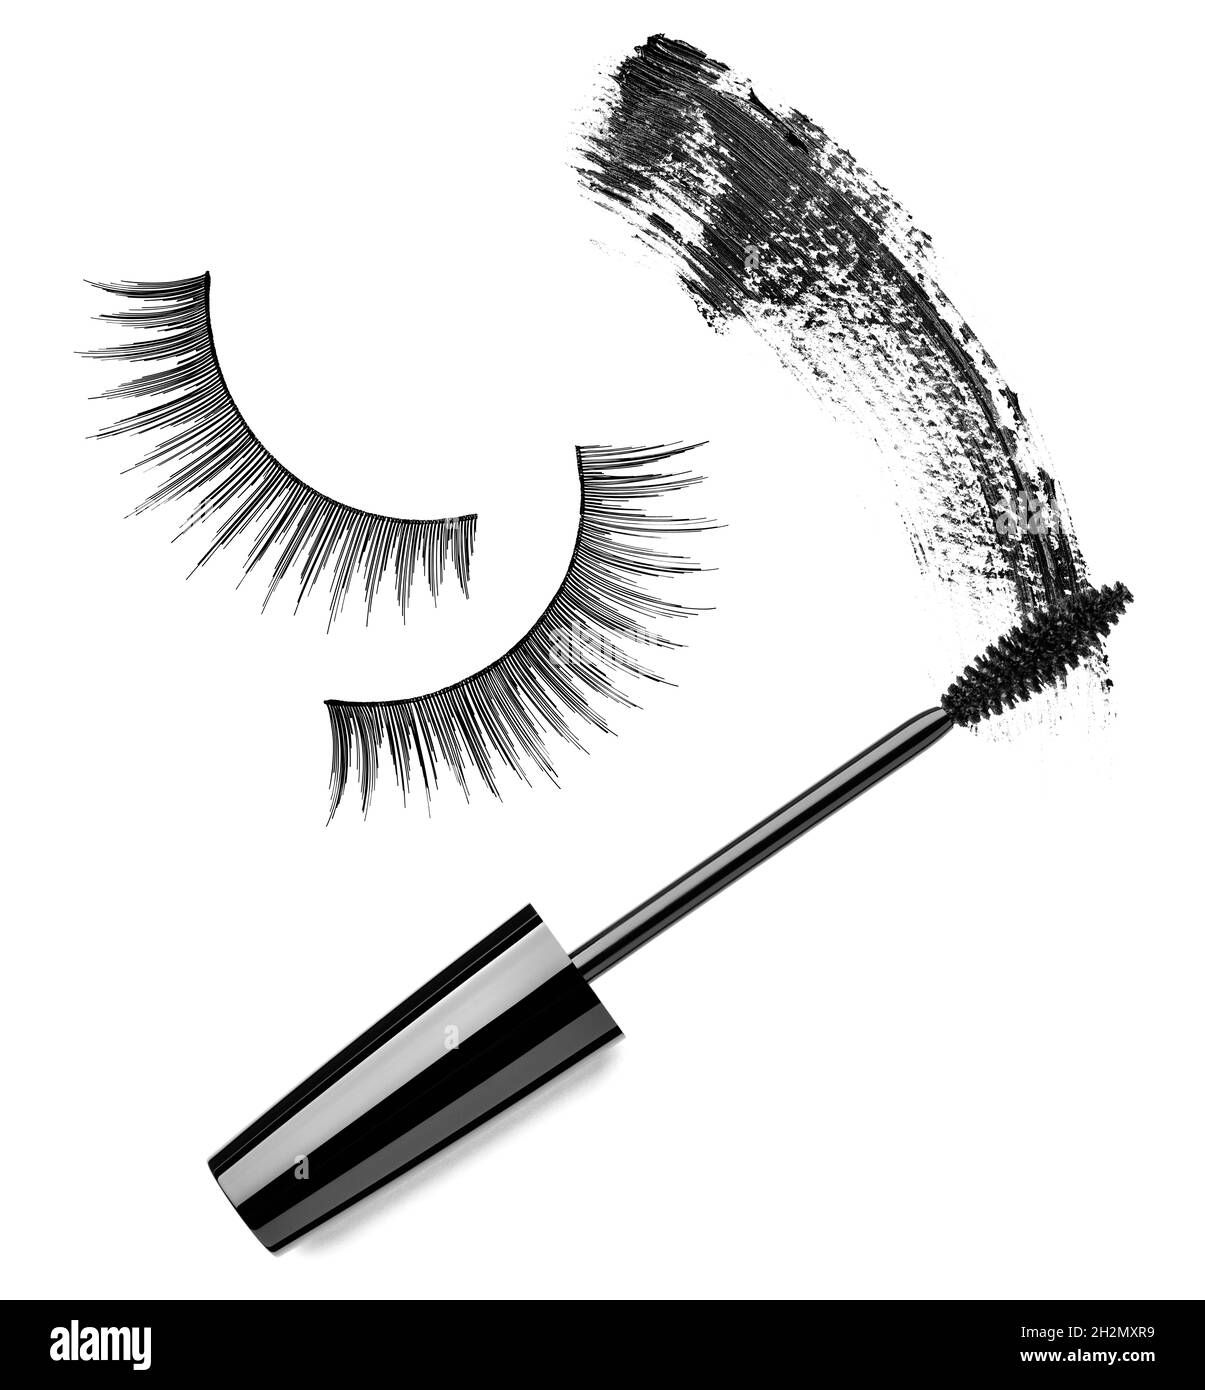 mascara eyelash make up beauty cosmetics Stock Photo